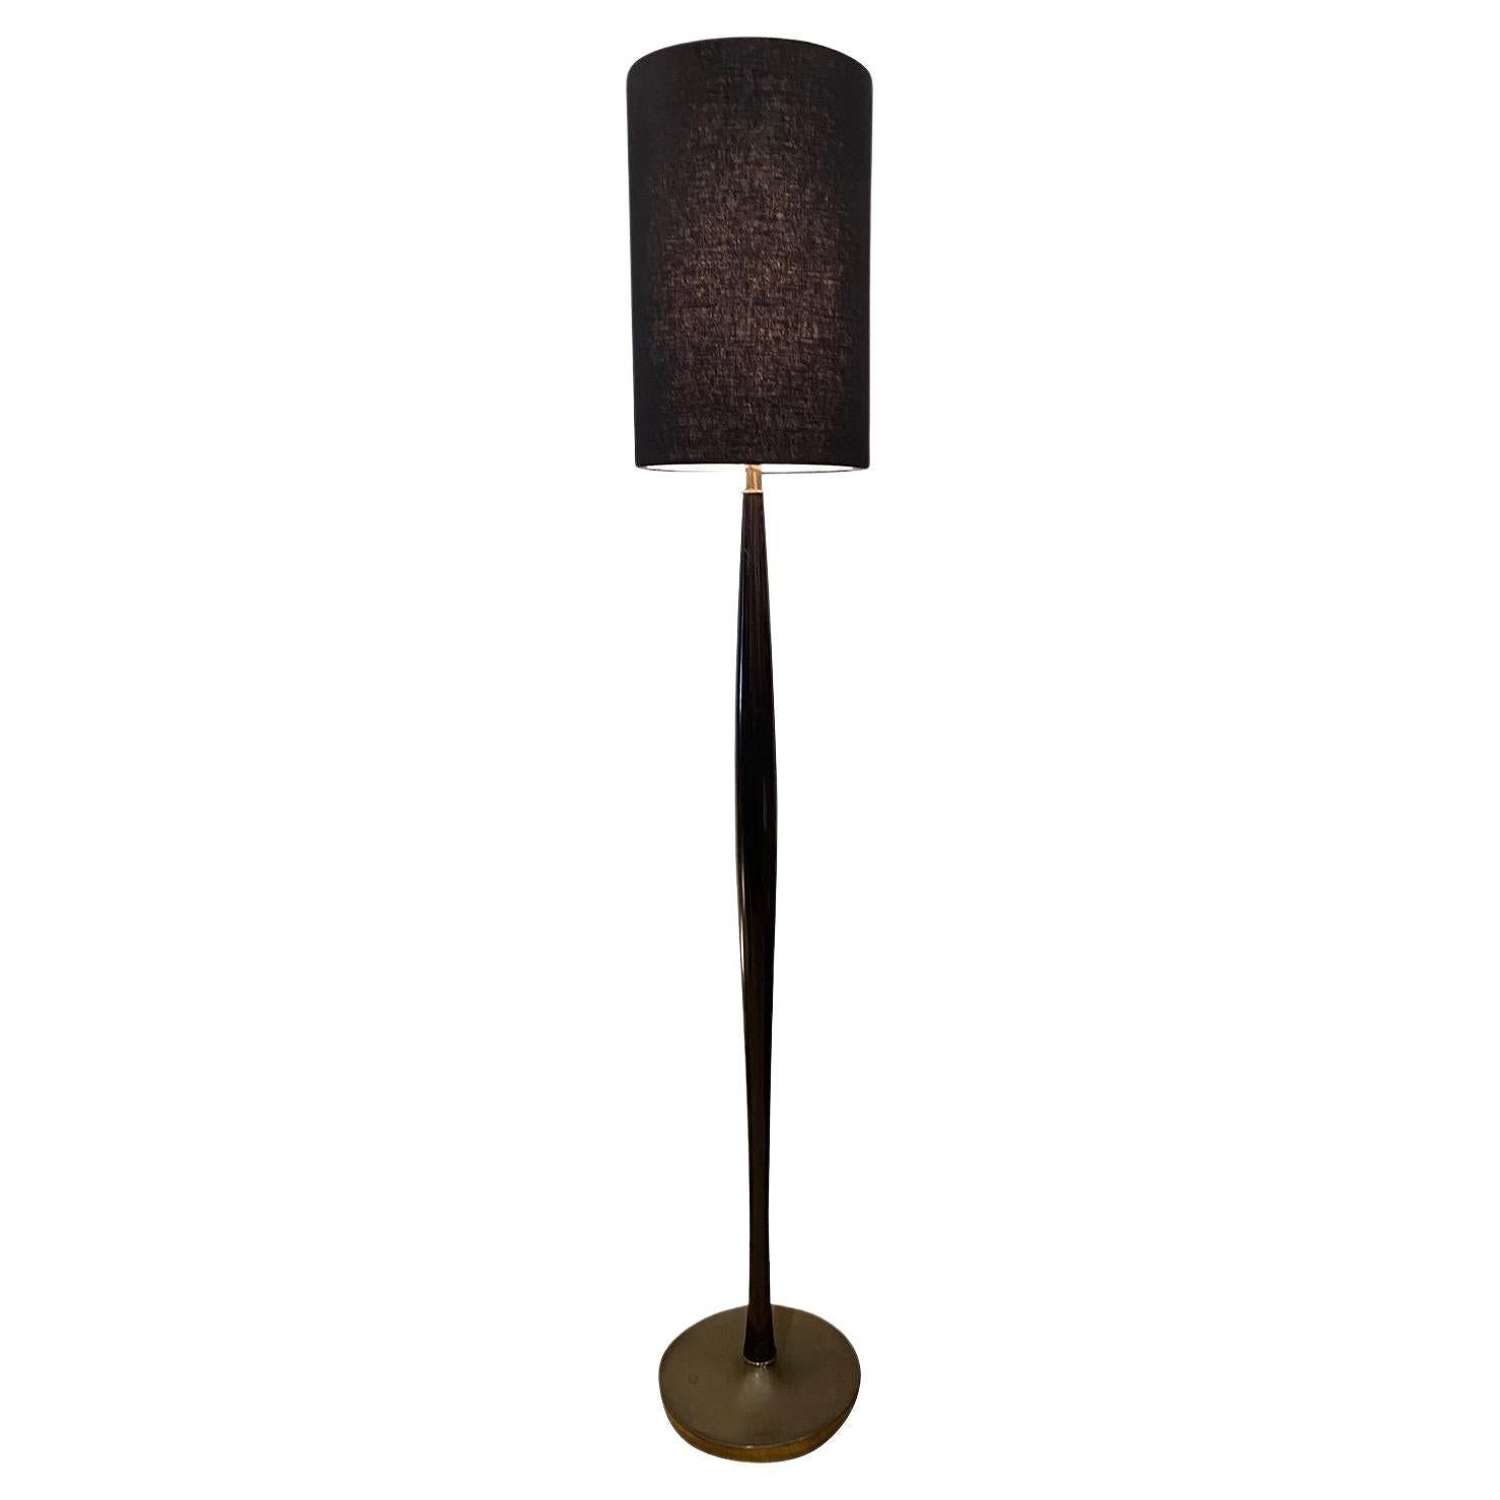 Brass and Black Ebonised Italian 1950's Floor Lamp Attrib. to Stilnovo